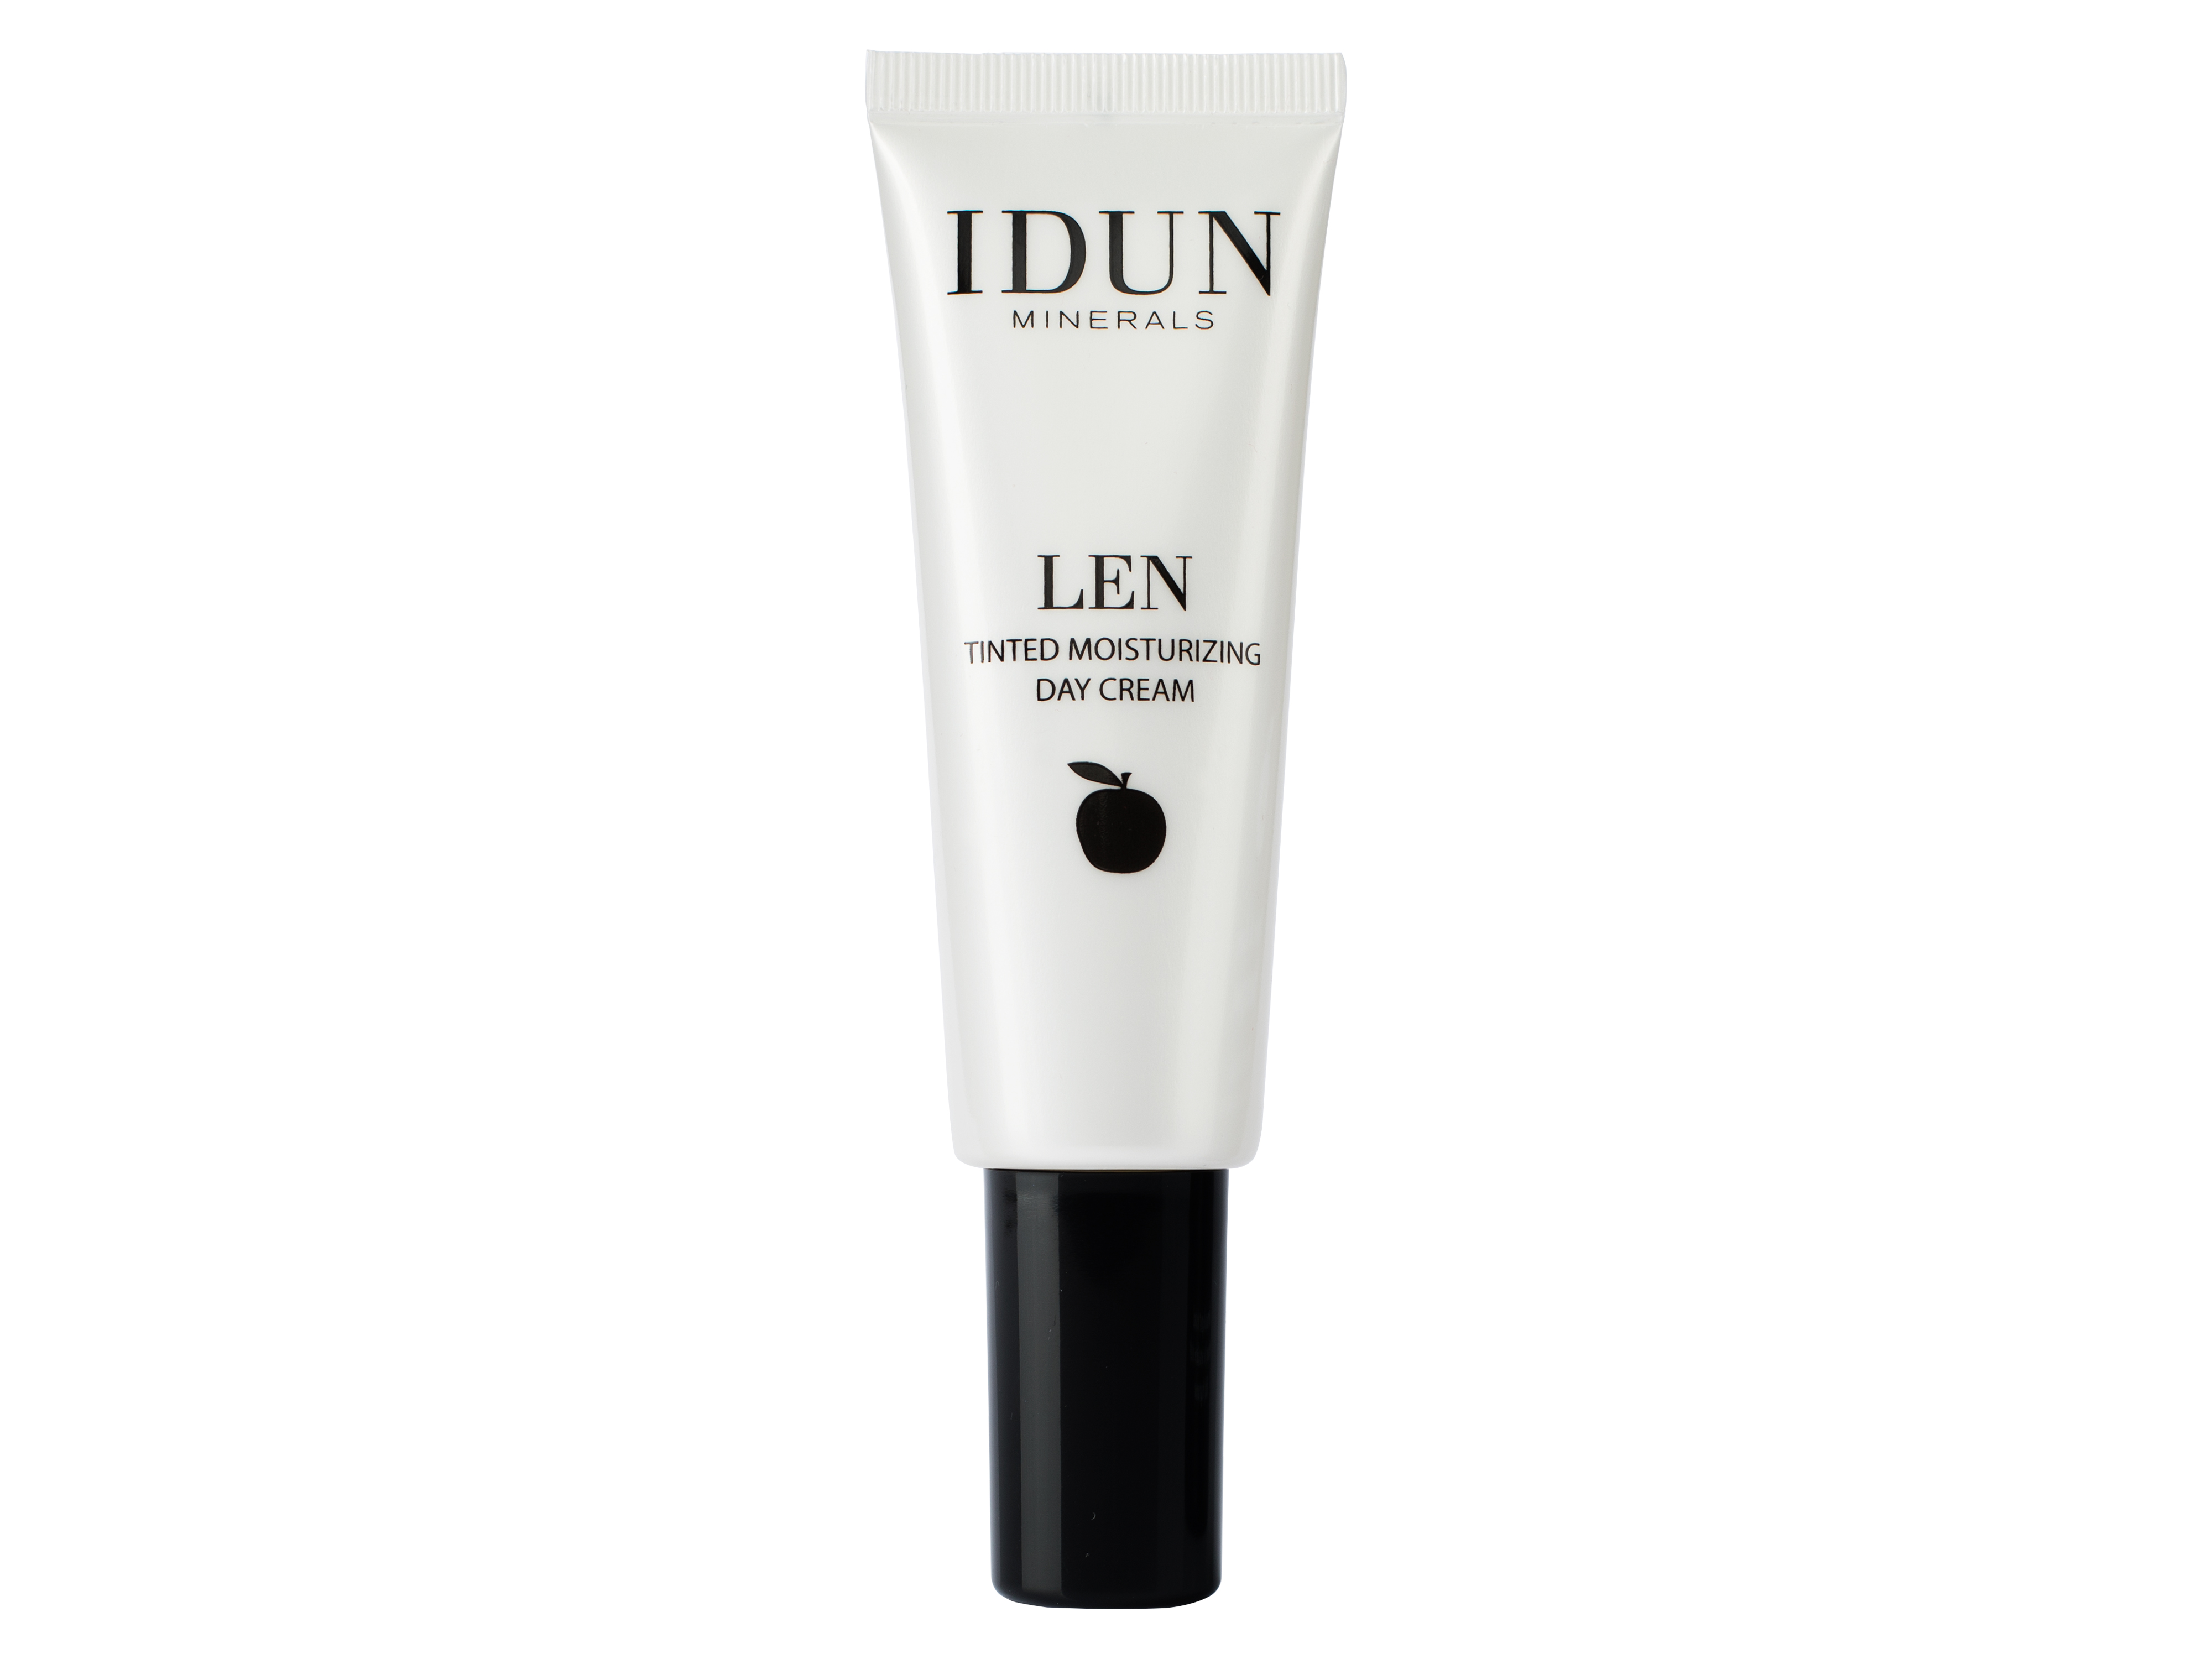 IDUN Minerals IDUNMinerals LEN Tinted Day Cream Medium, 50 ml